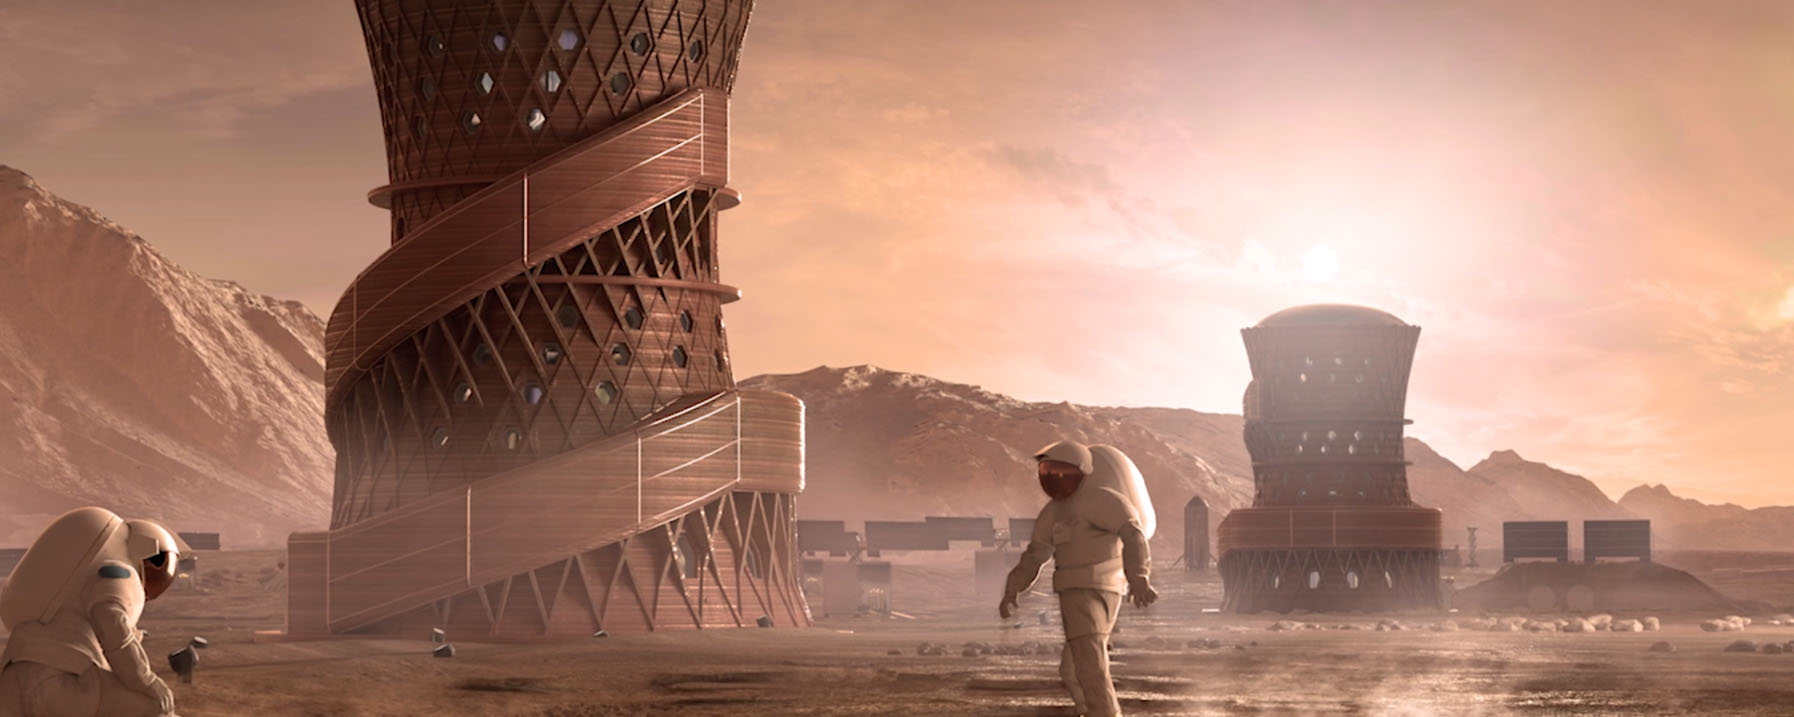 Illustration of Potential Future Habitat on Mars